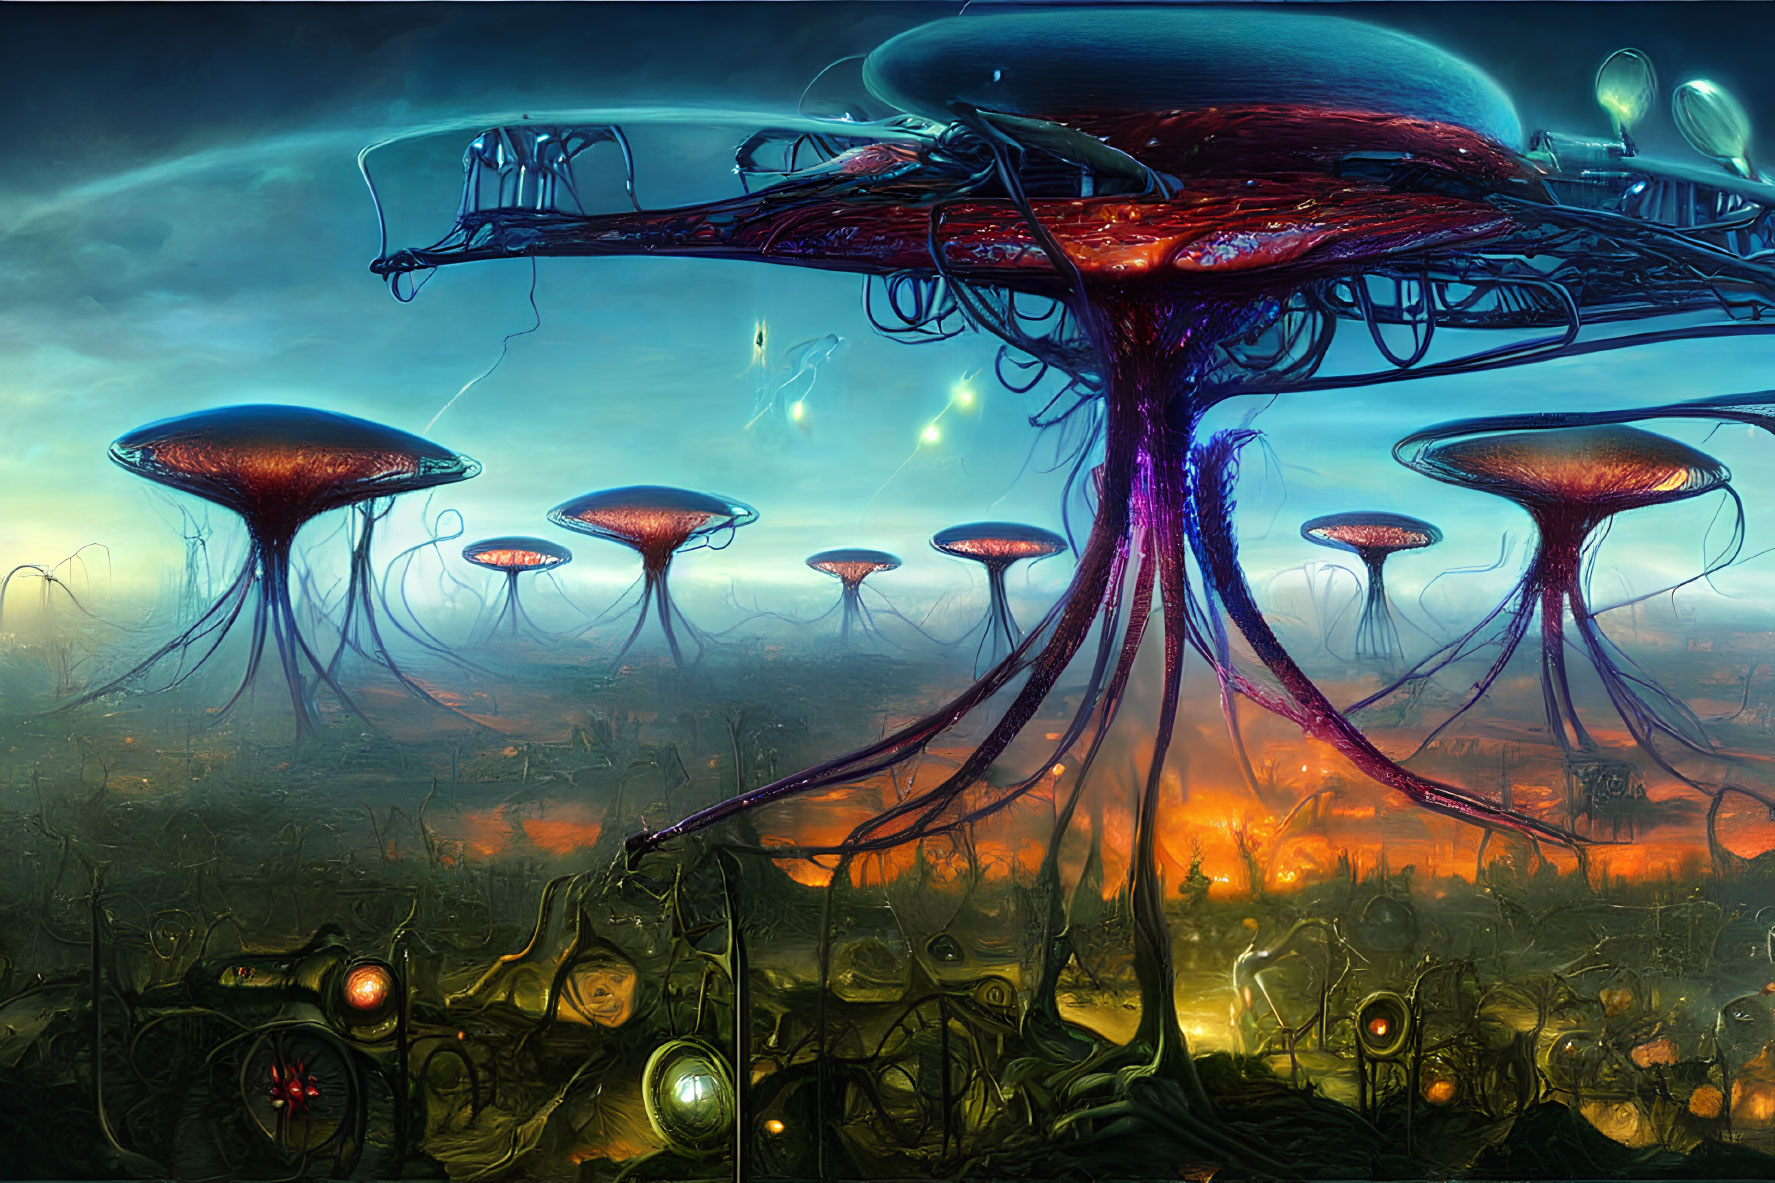 Bioluminescent mushroom structures in futuristic cityscape